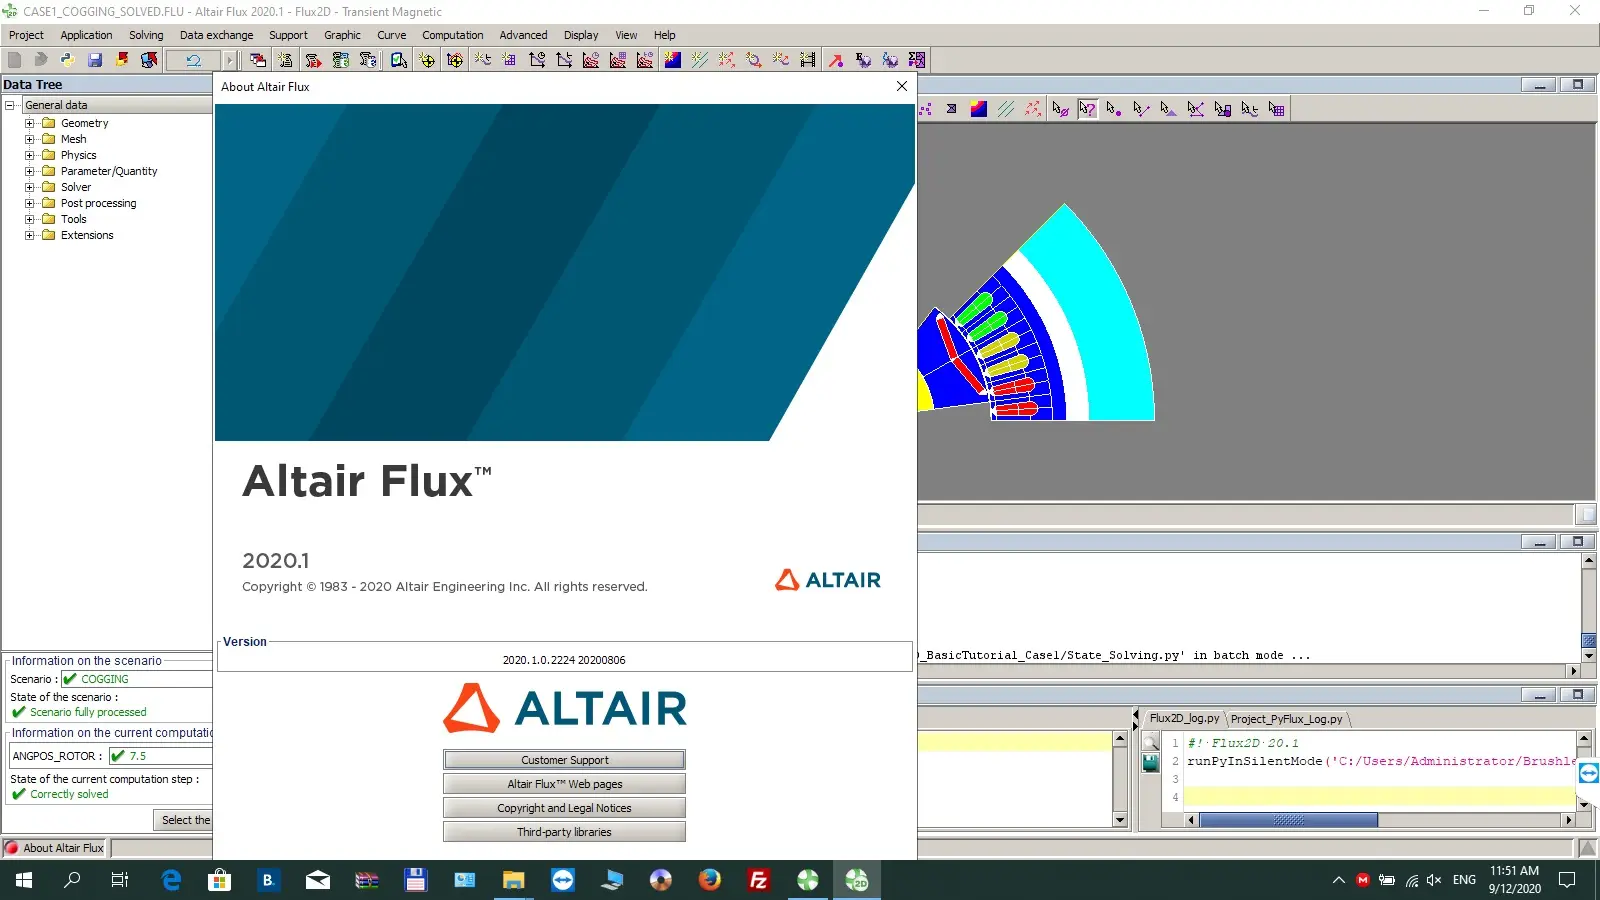 Altair HyperWorks FEKO 2023.0 instal the new version for windows